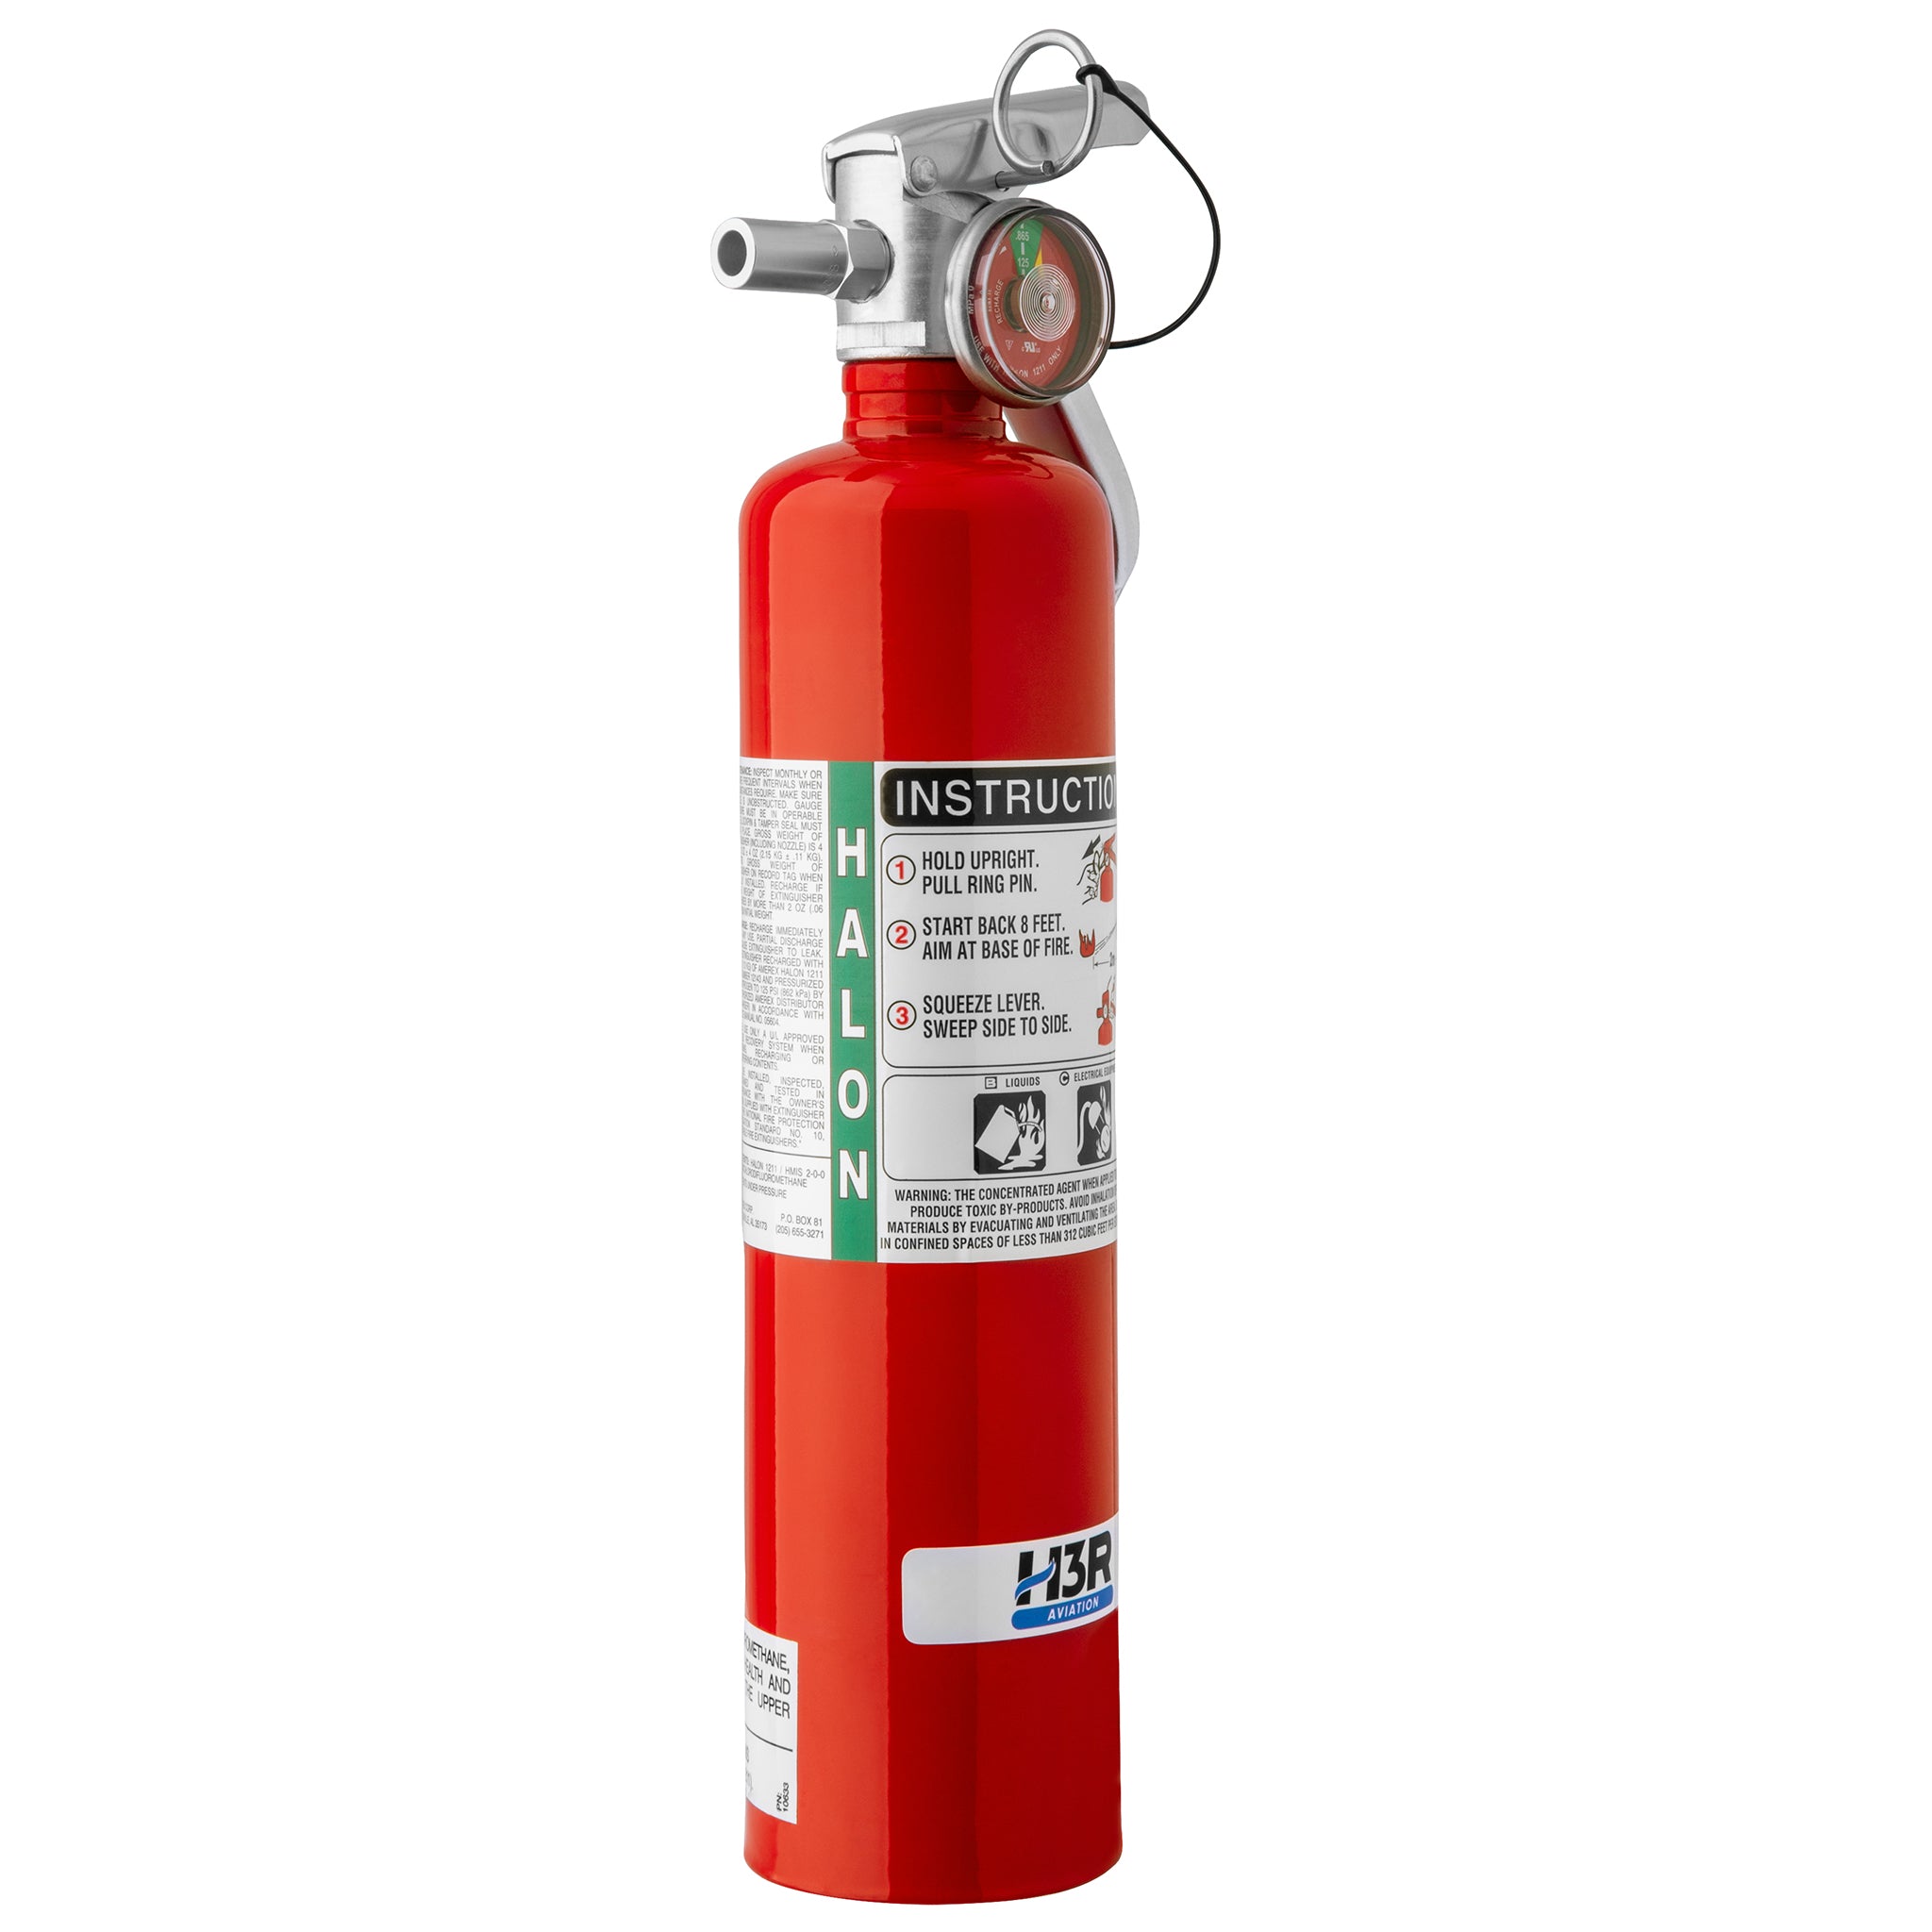 C352TS - 2.5 lb. Halon Fire Extinguisher